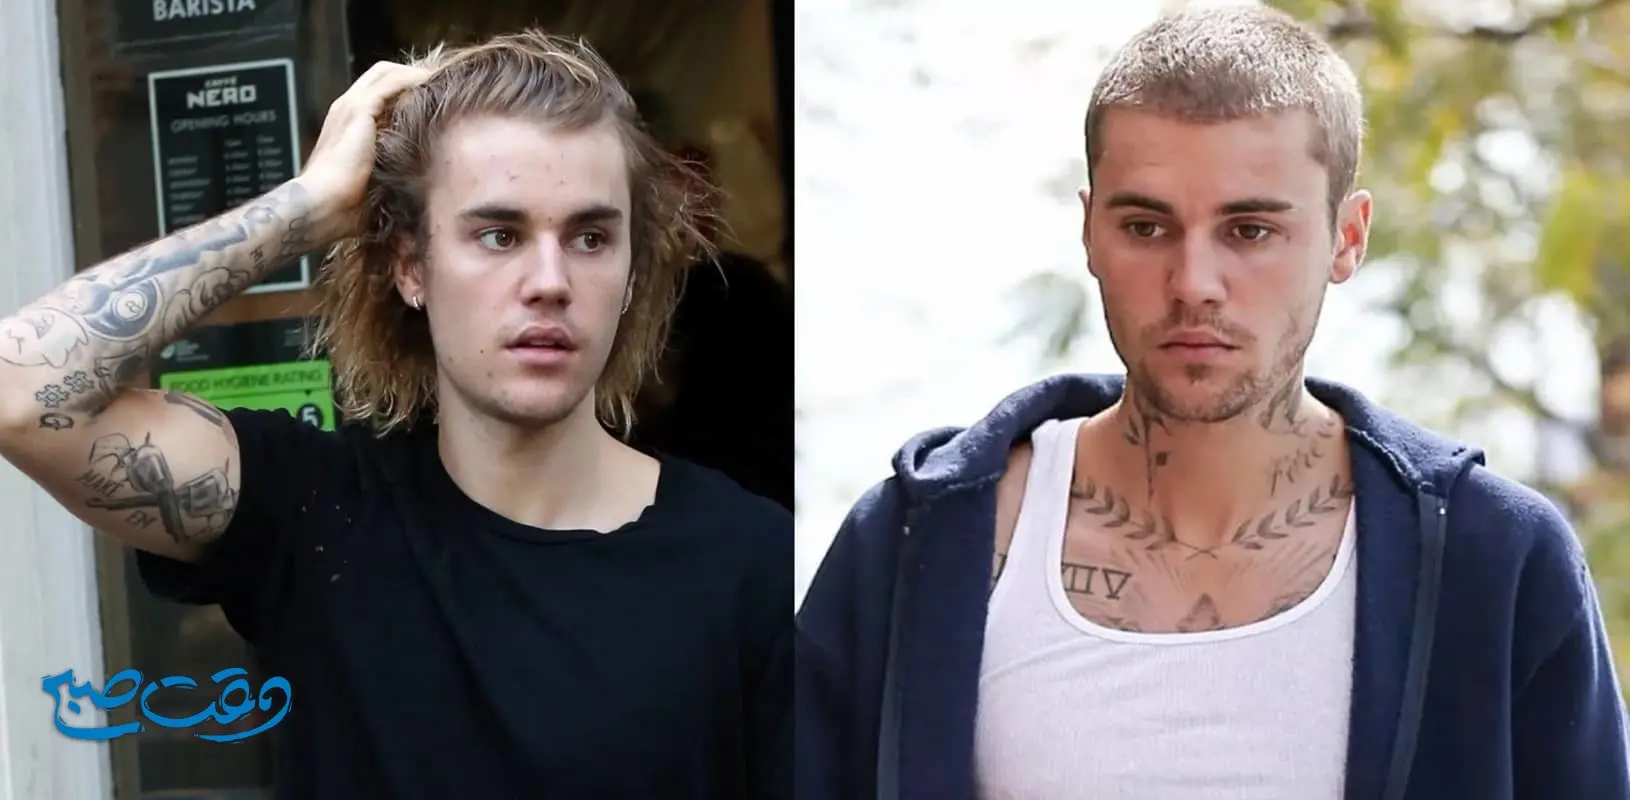 Justin-Bieber-Hair-Transplant (1)